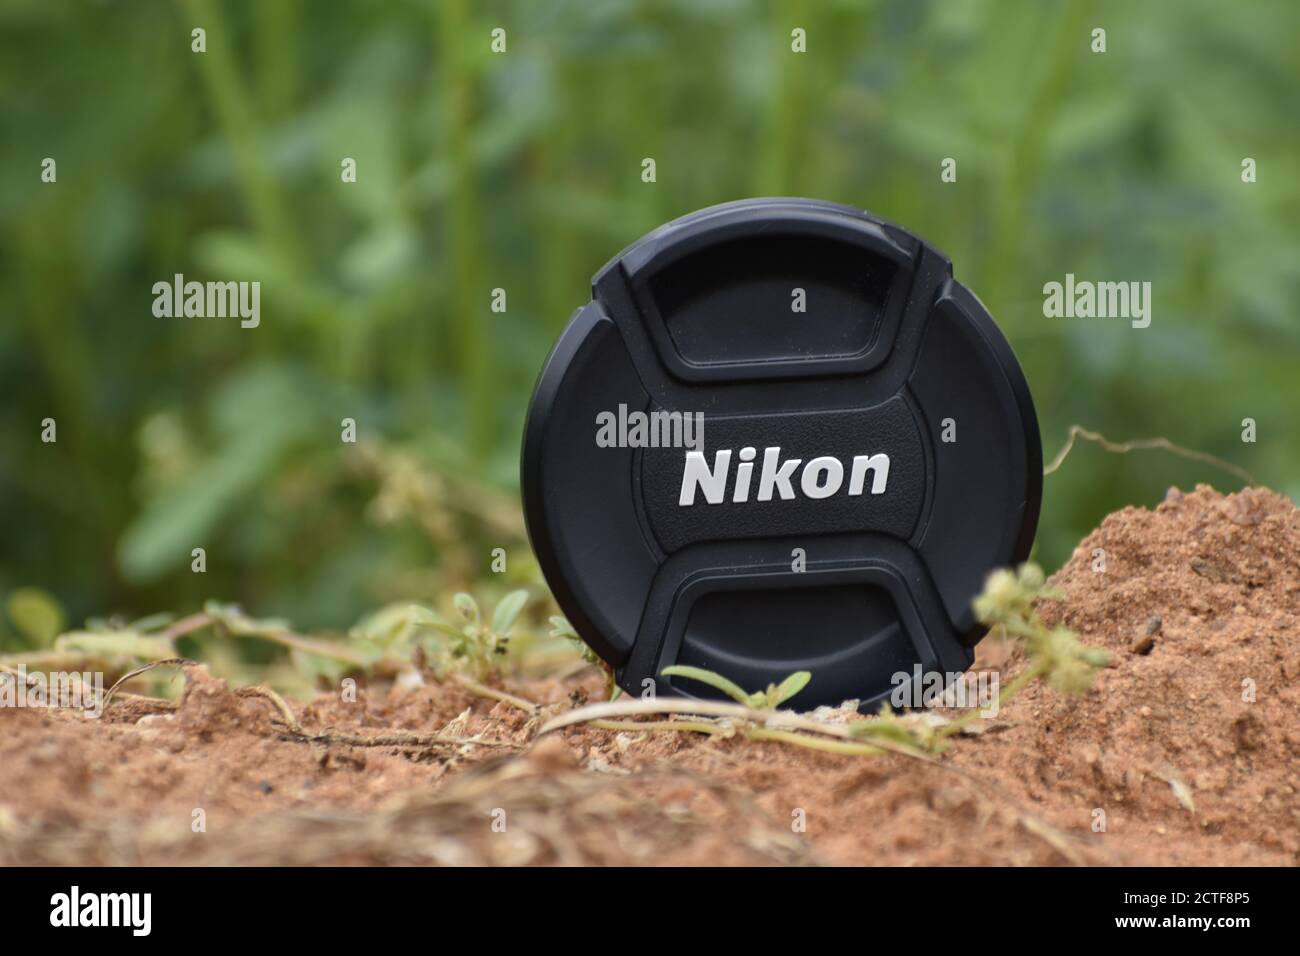 Nikon lens cap image Stock Photo - Alamy